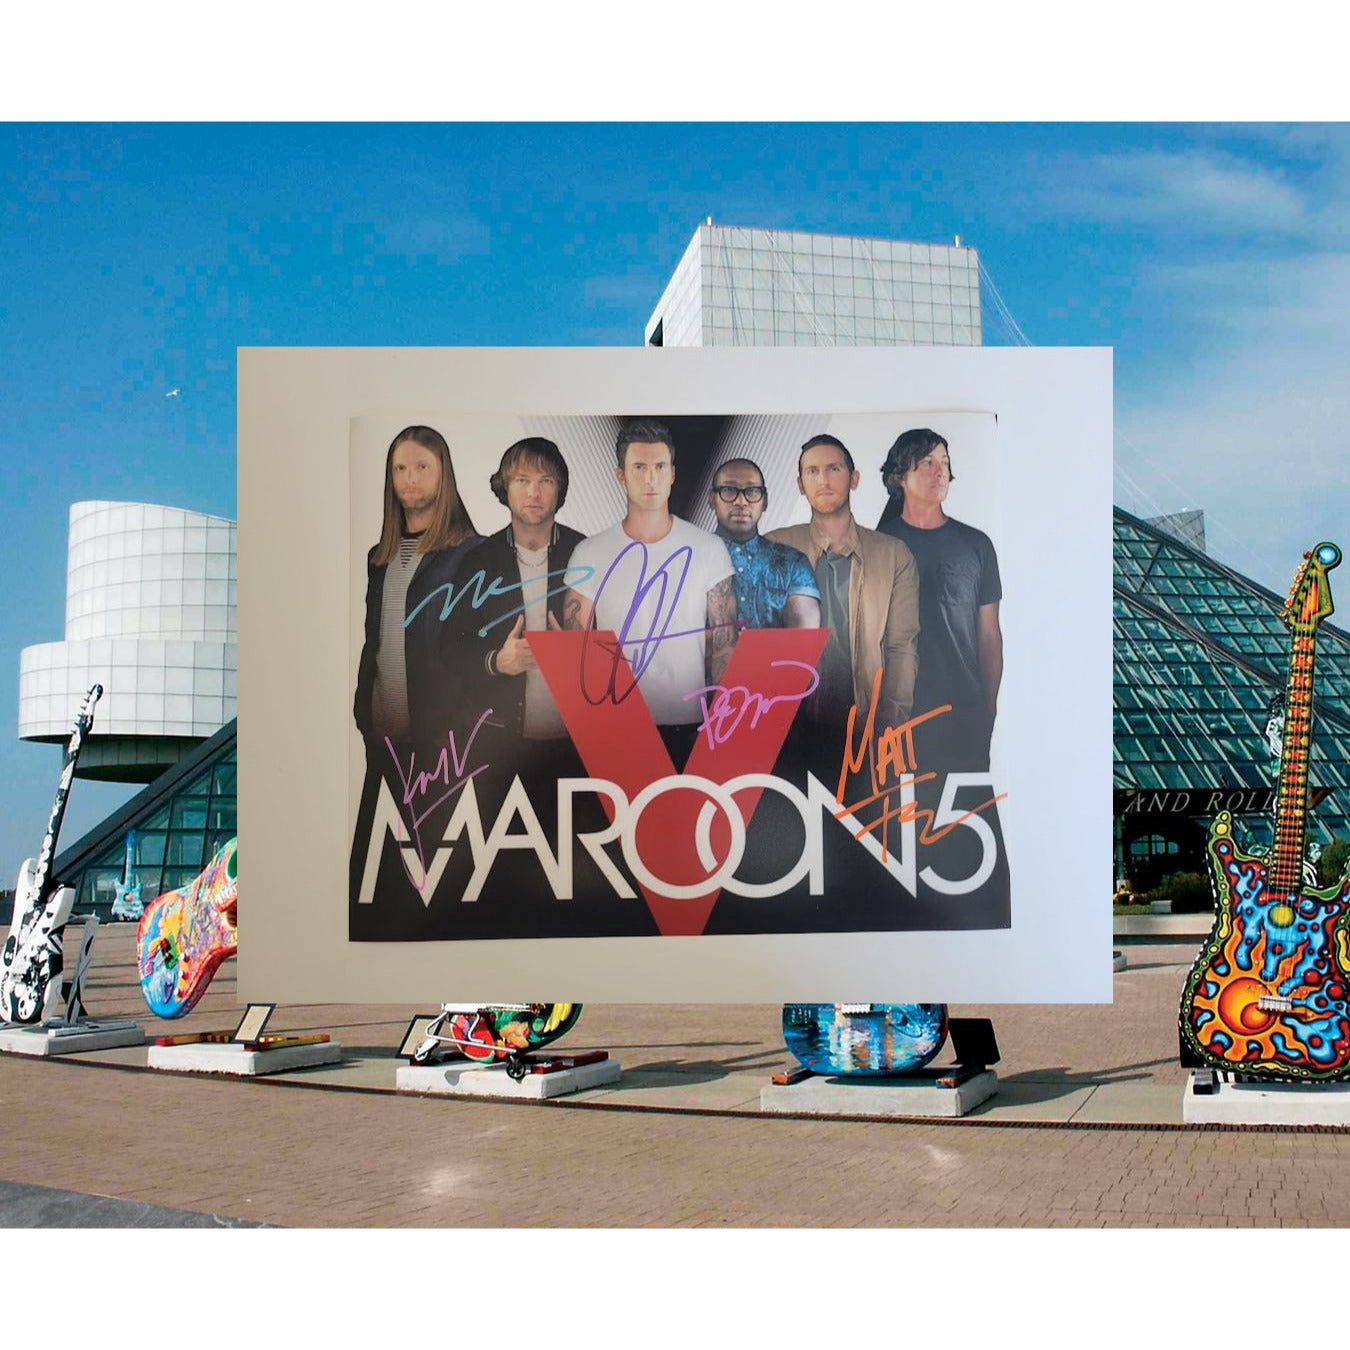 Adam Levine Maroon 5 band signed 8x10 photo